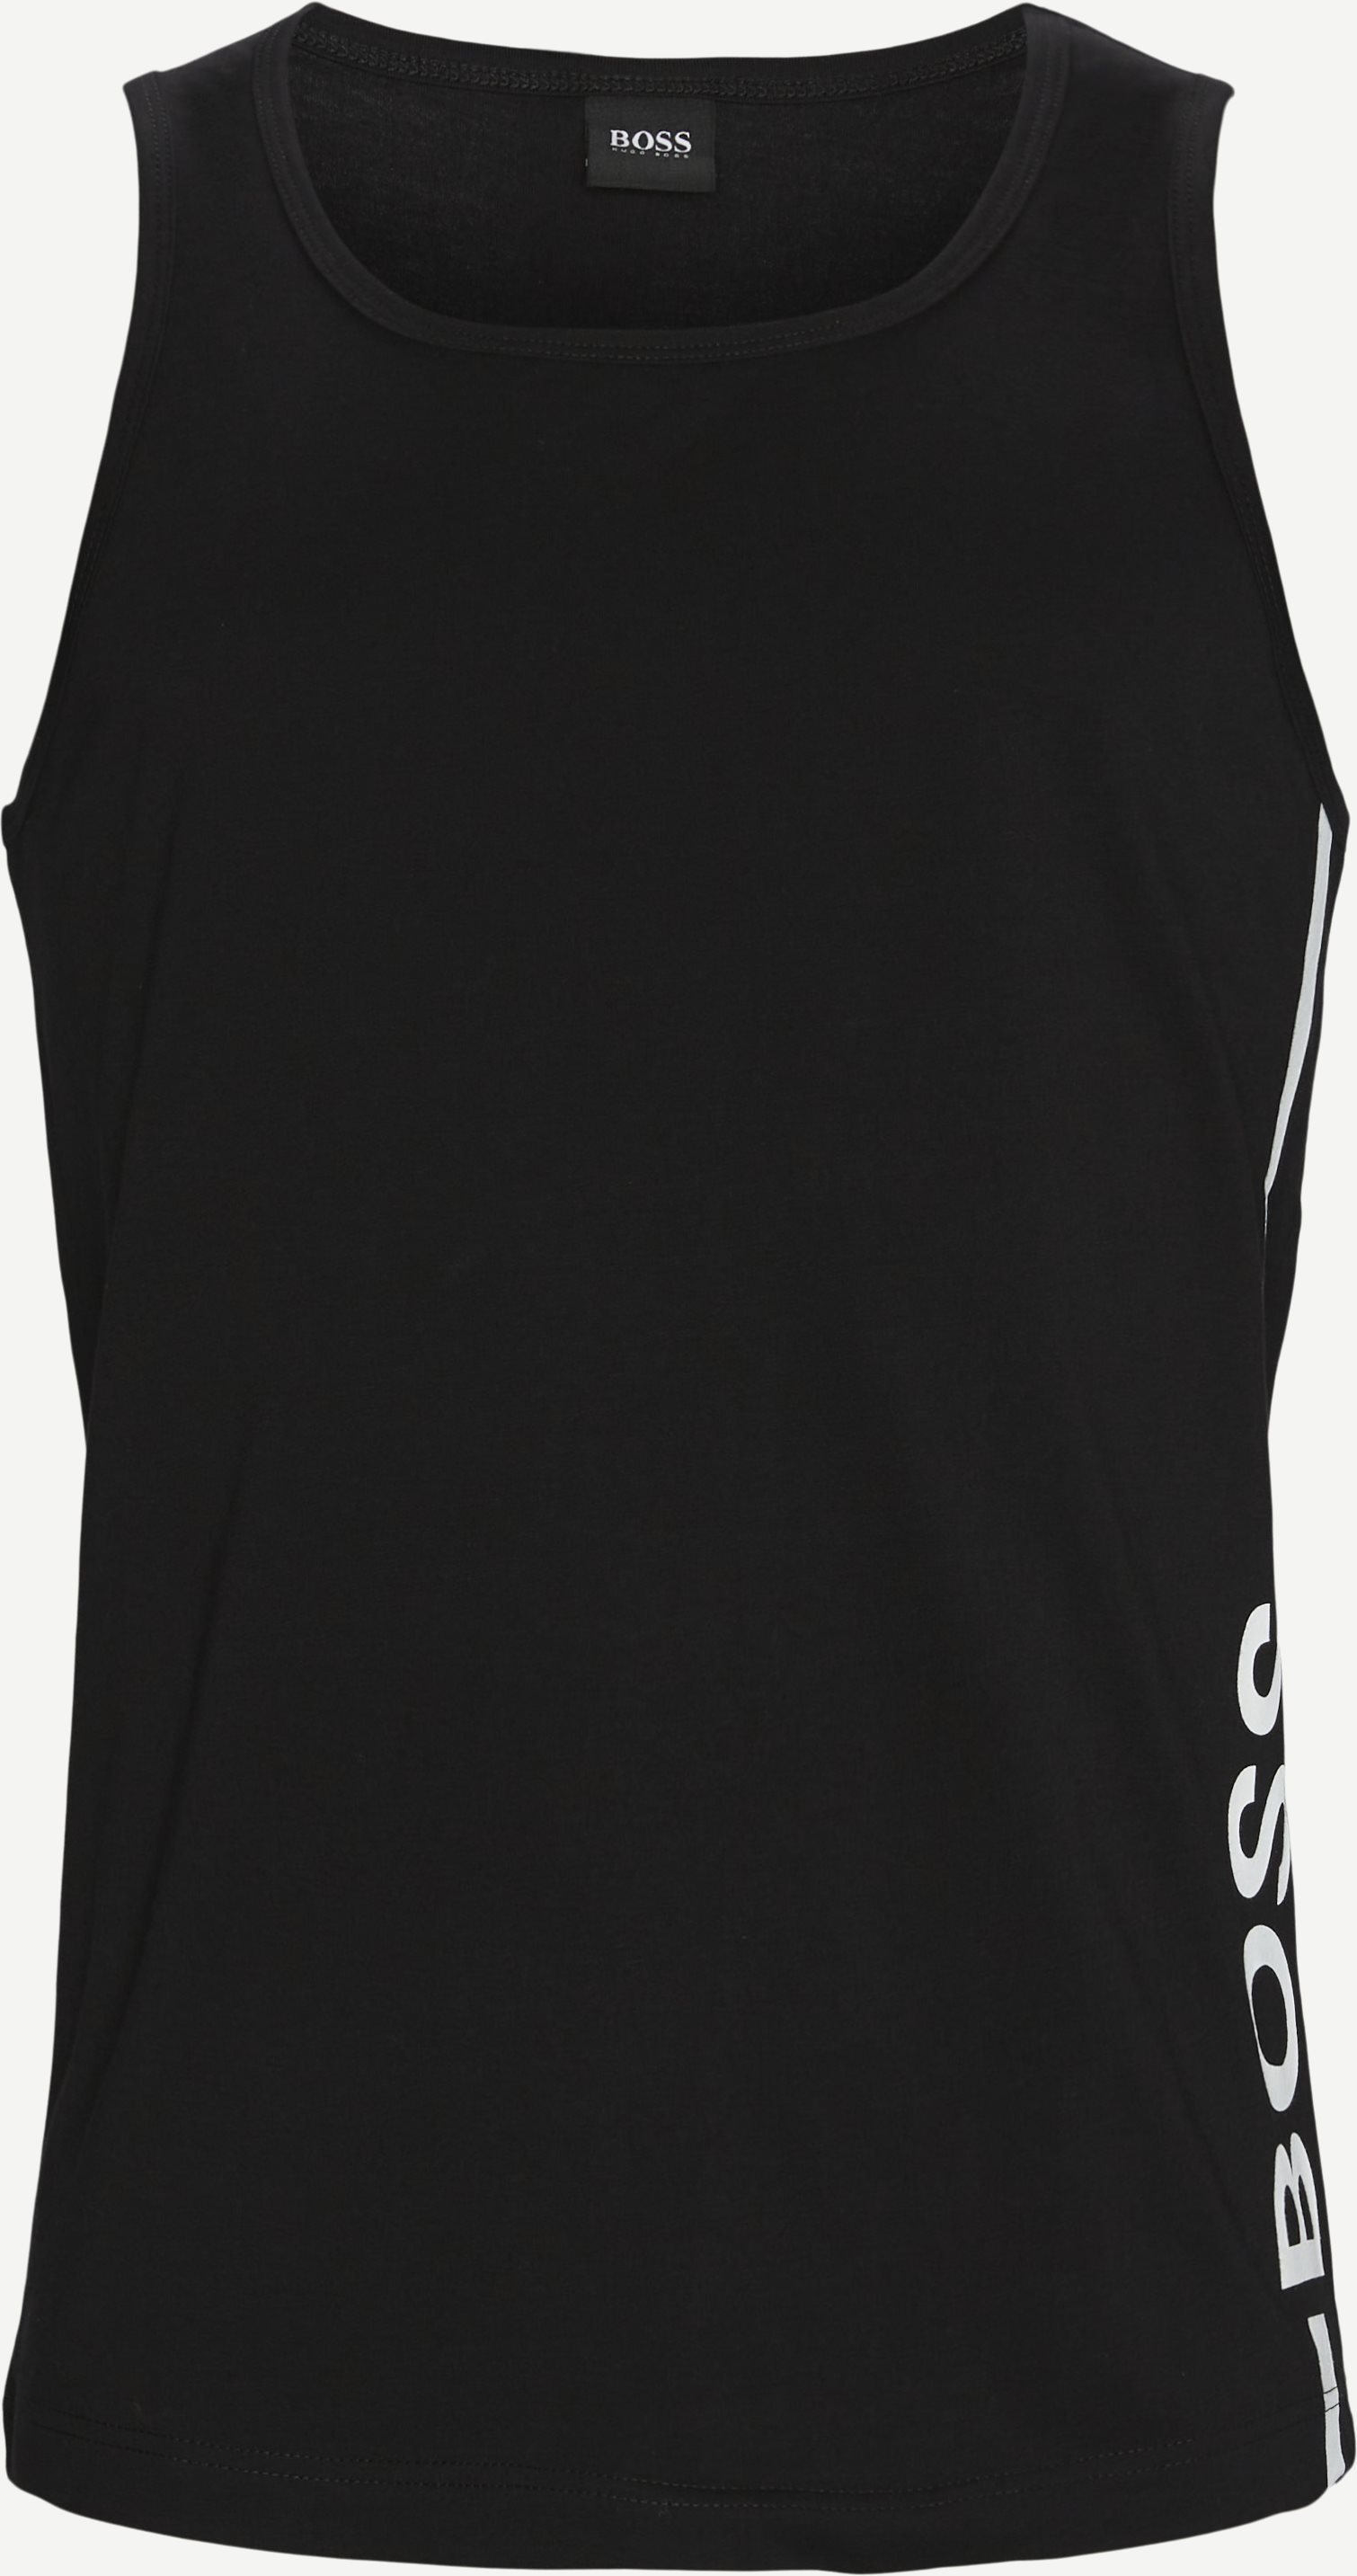 Beach Tank Top - T-shirts - Regular fit - Black